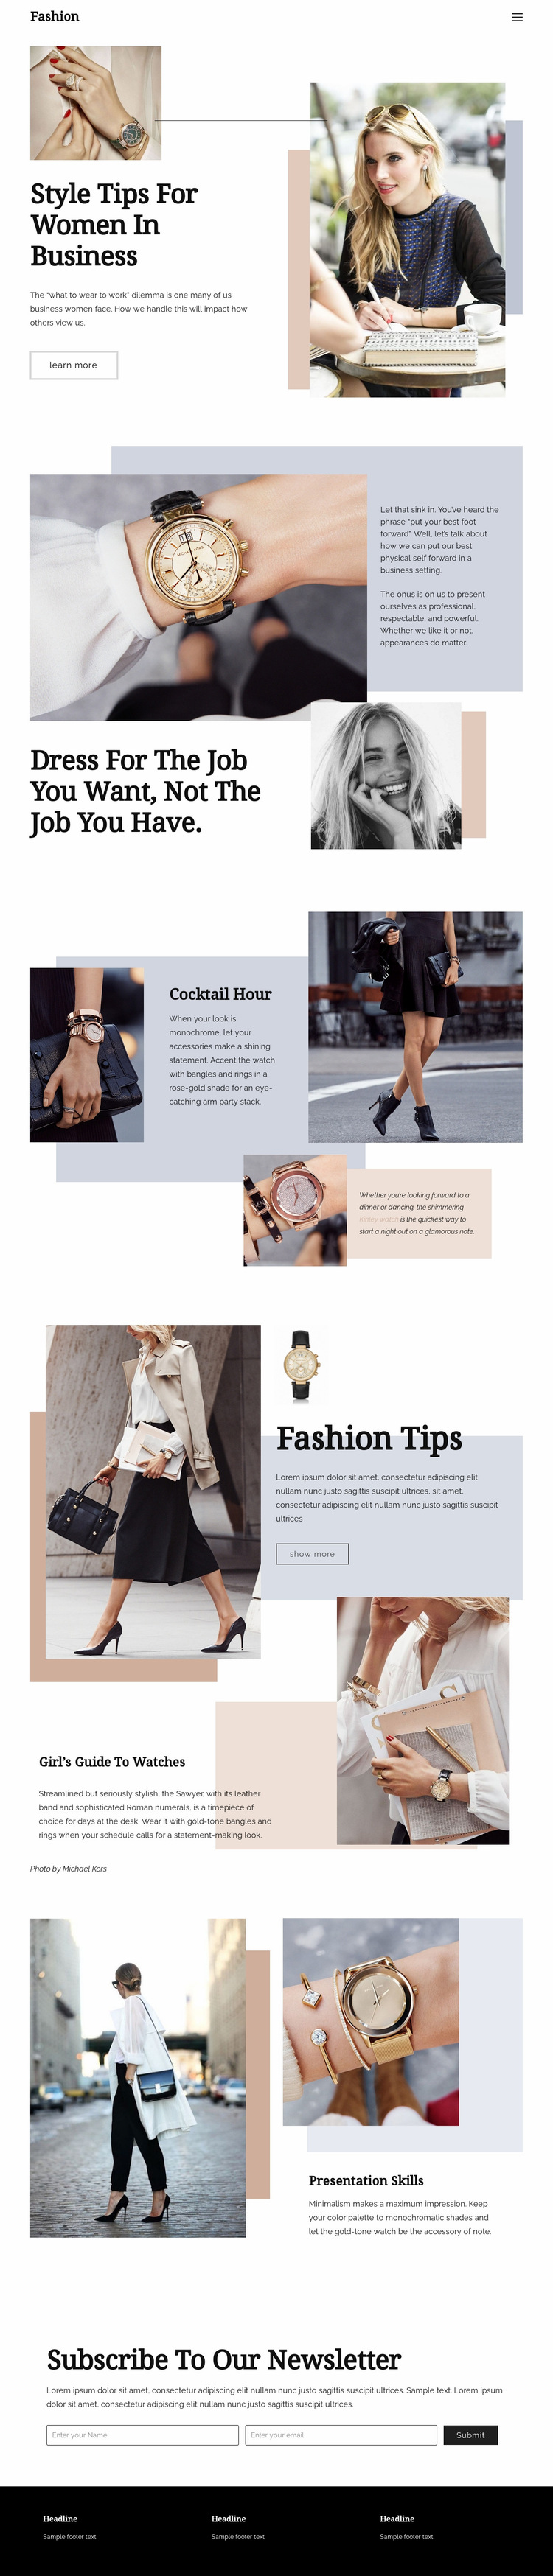 Fashion tips Web Page Design